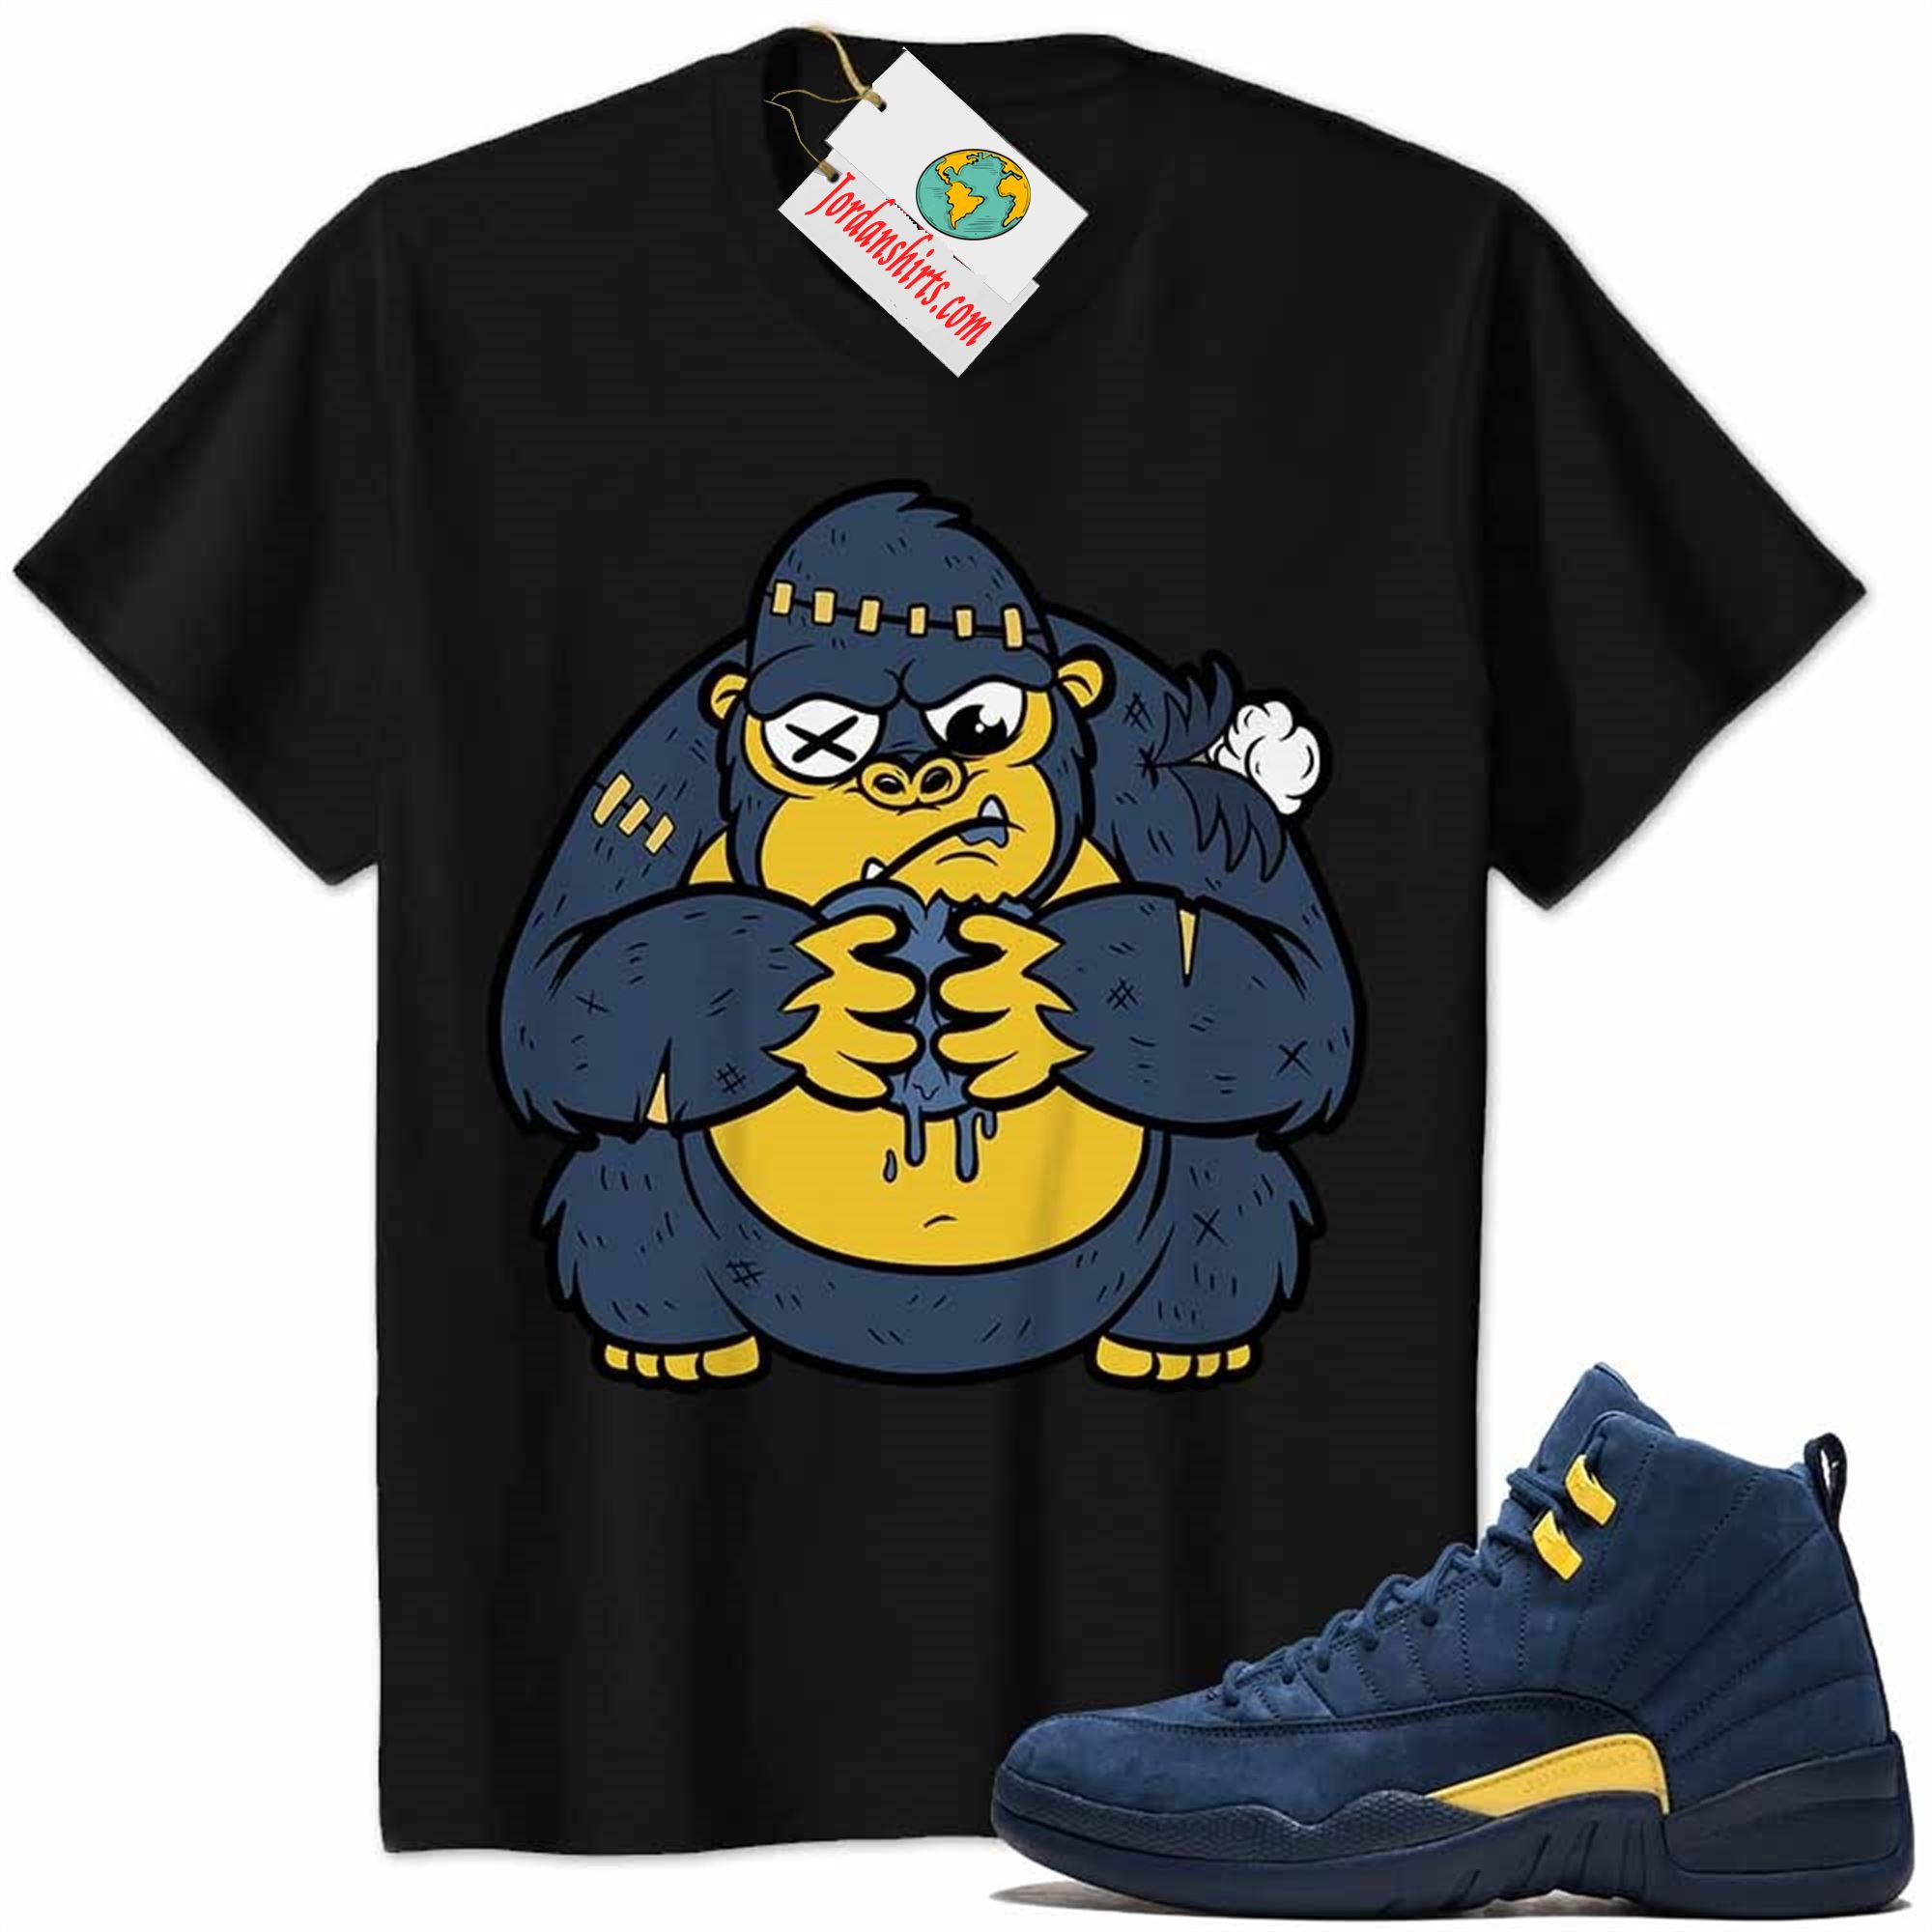 Jordan 12 Shirt, Cute Monkey Broken Heart Black Air Jordan 12 Michigan 12s Plus Size Up To 5xl